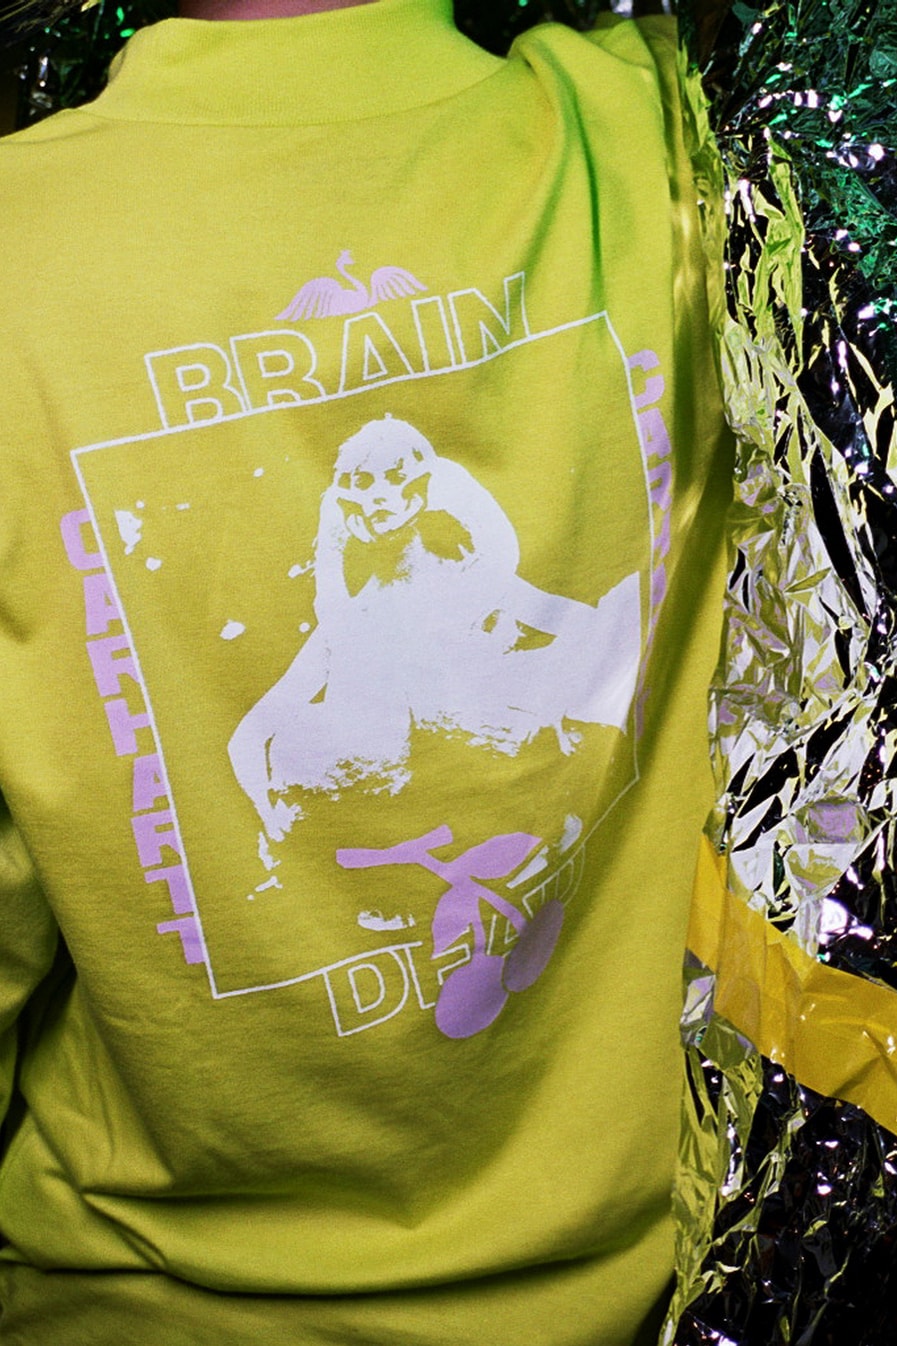 brain dead carhartt wip collaboration capsule july 14 drop release date info logo overalls tee shirt cap hat yellow carpenter pants graphic jacket release date sale buy